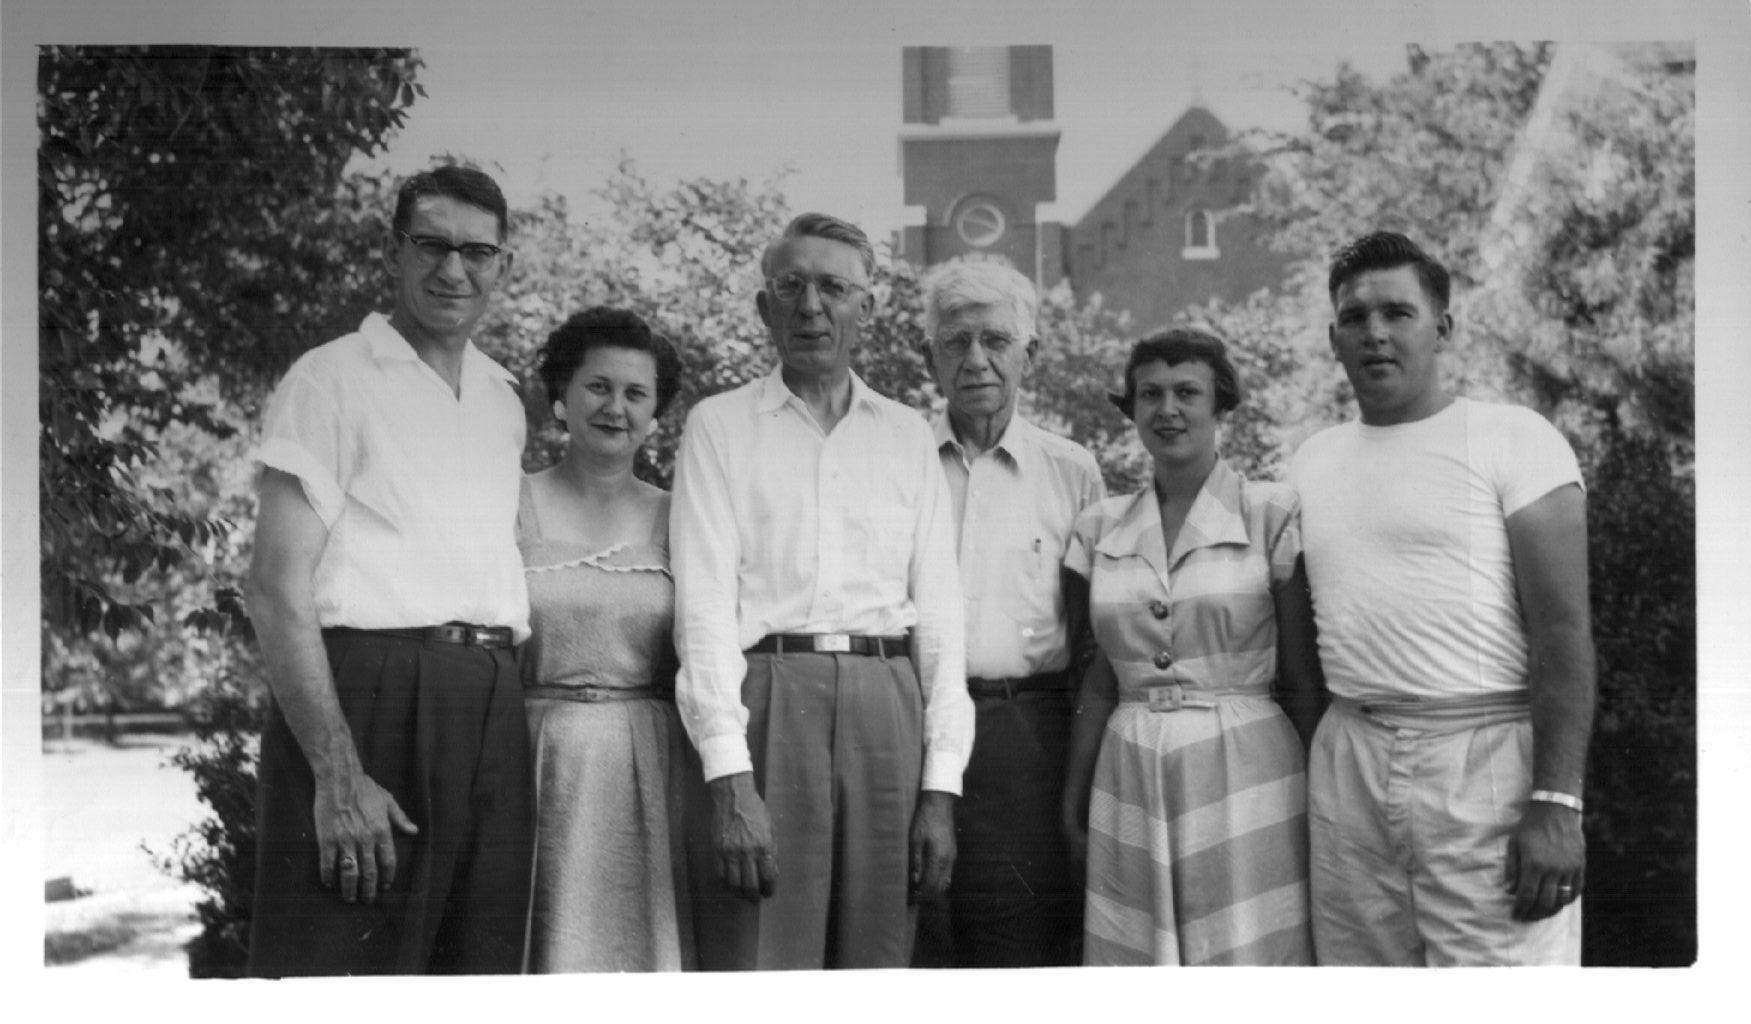 JN Pivonka family members, ca. 1950's